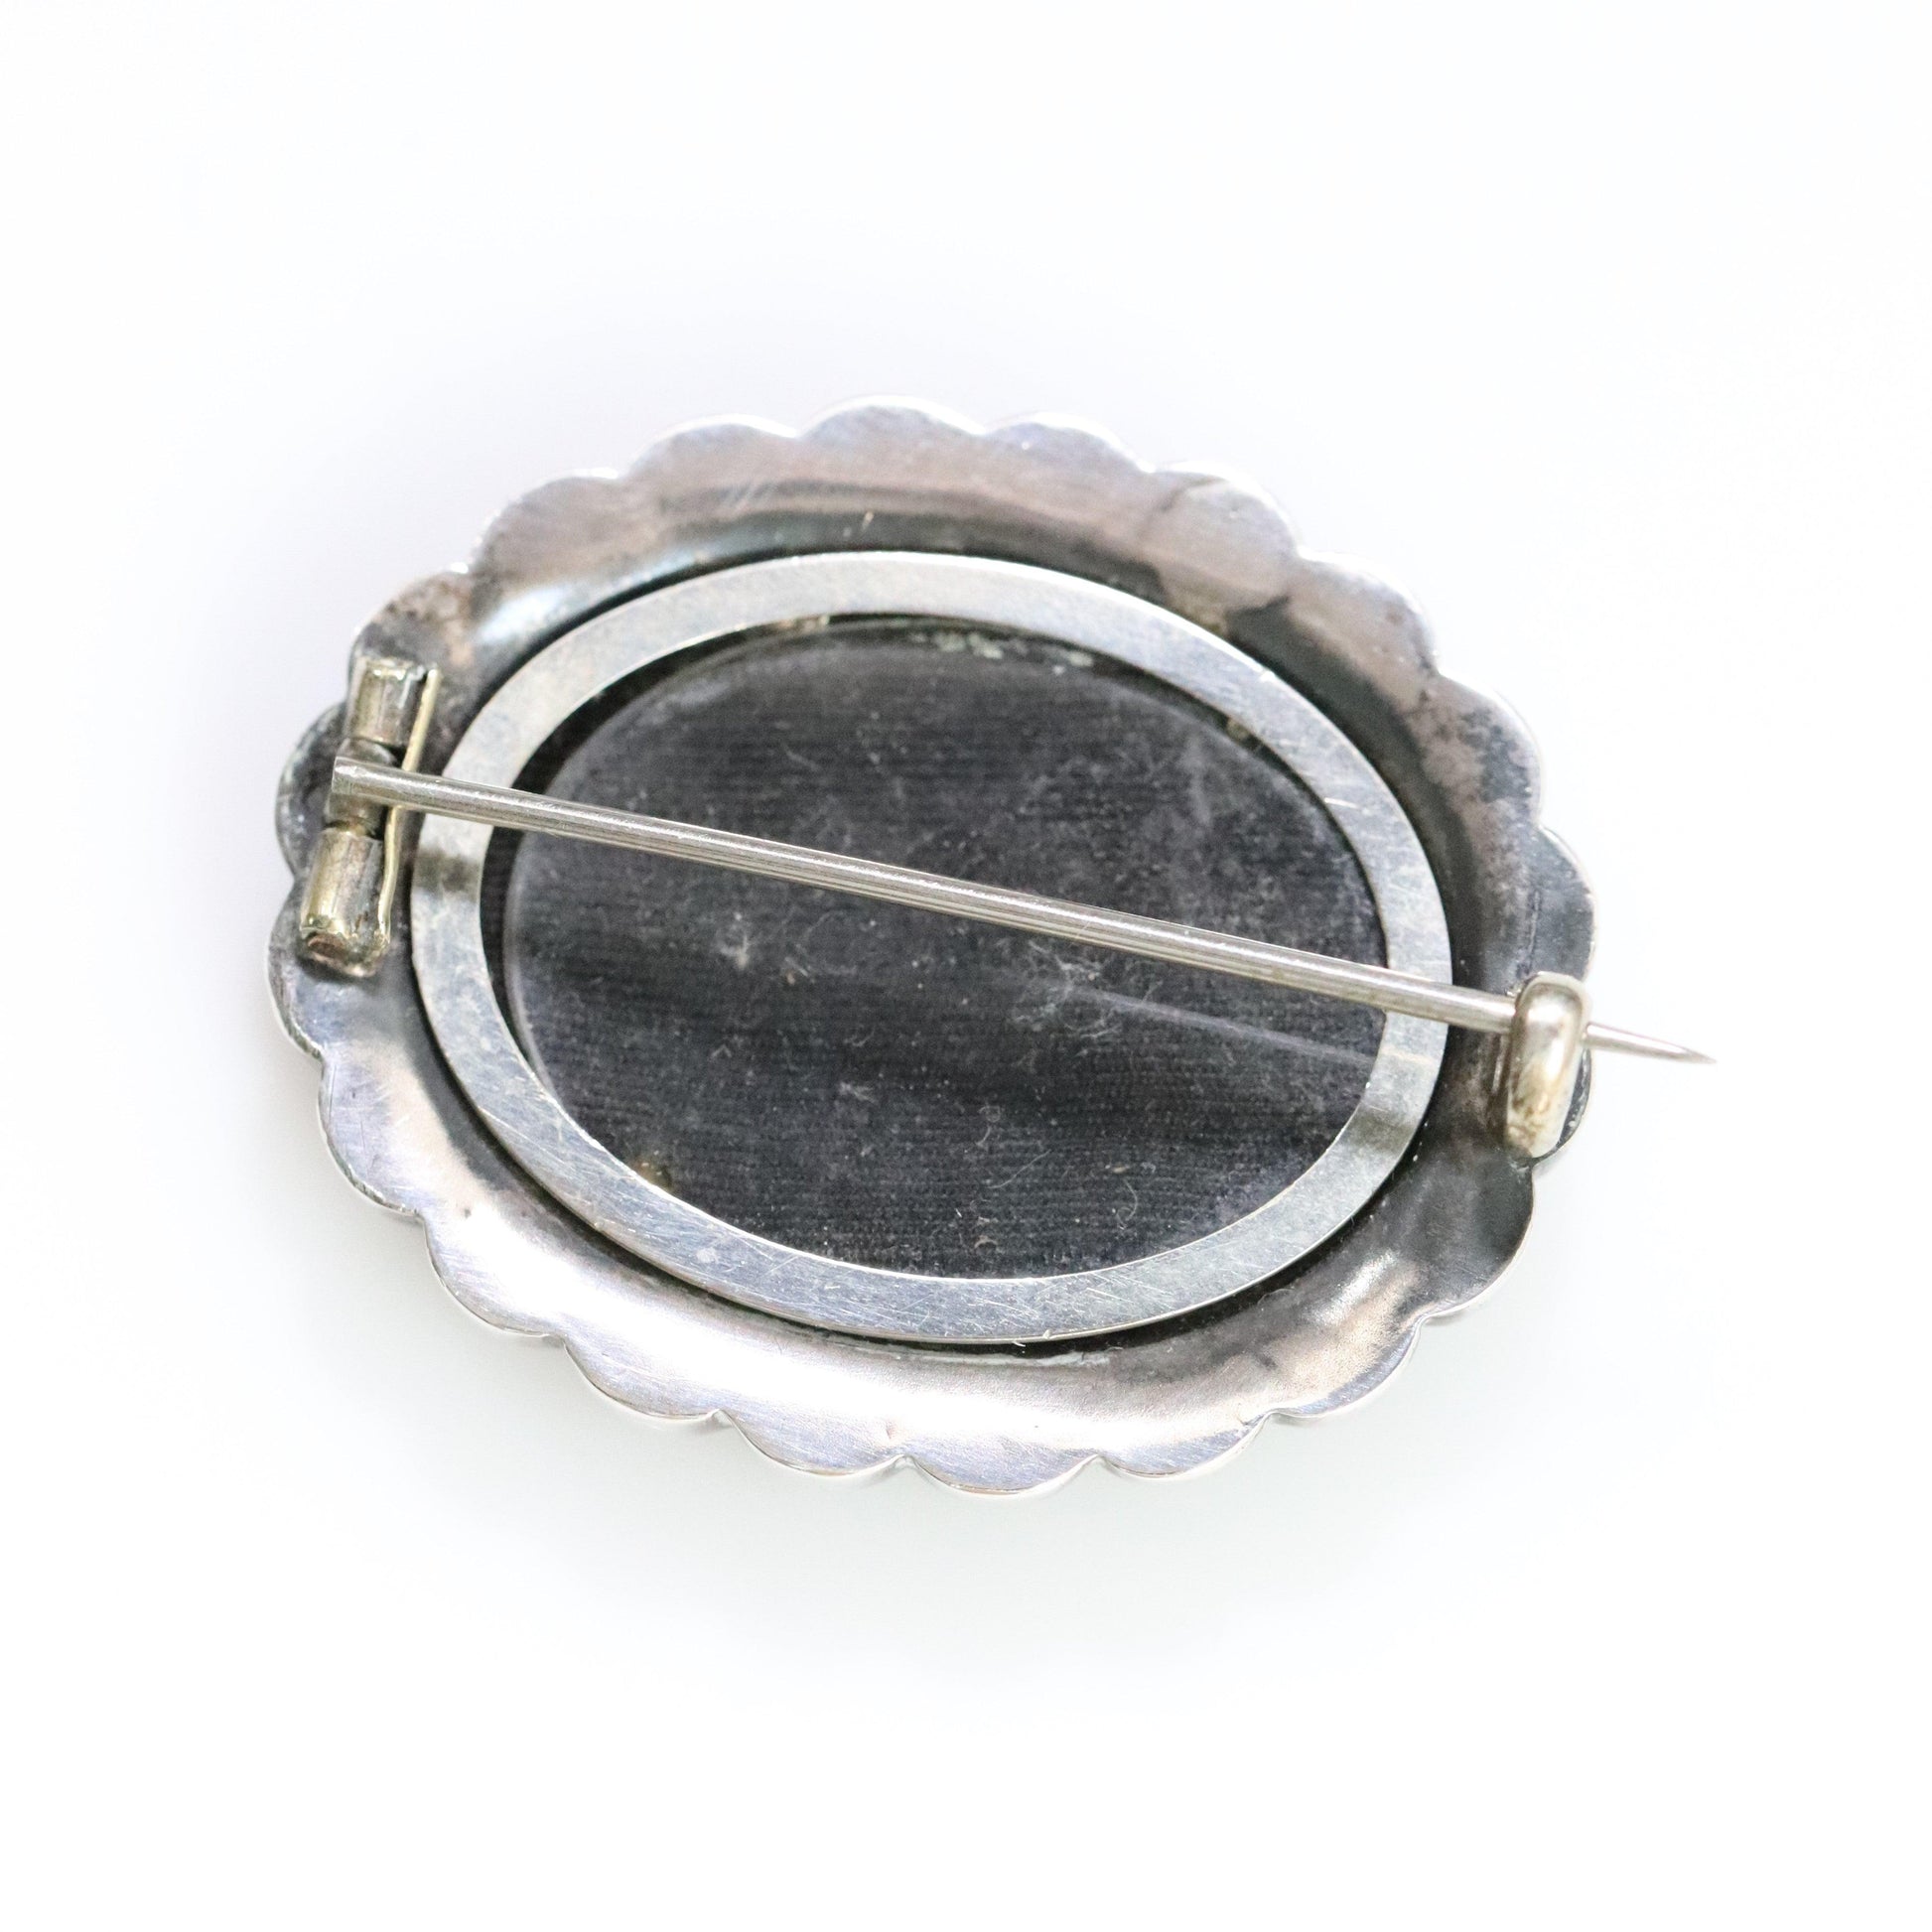 Antique English Silver Jewelry | Victorian Locket Brooch - Carmel Fine Silver Jewelry